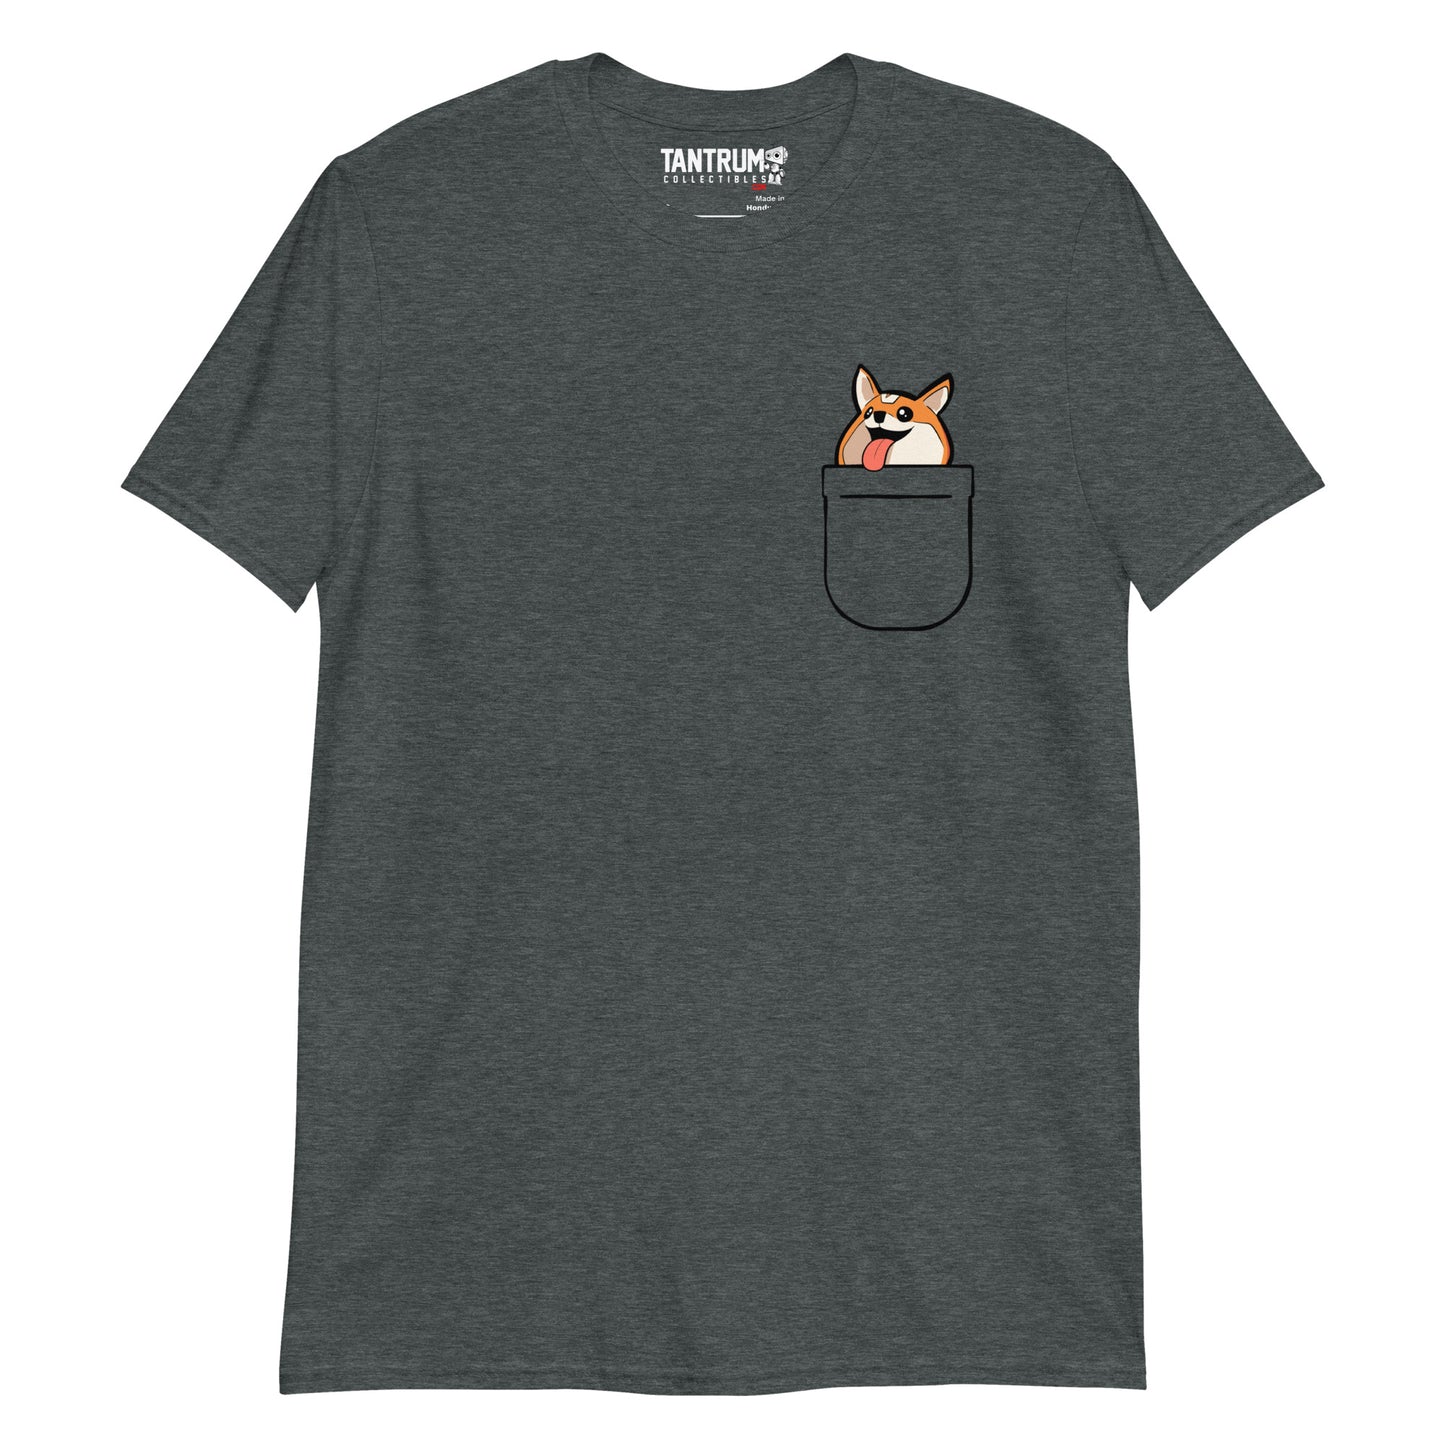 Bobbeigh - Unisex T-Shirt - Printed Pocket HypePup